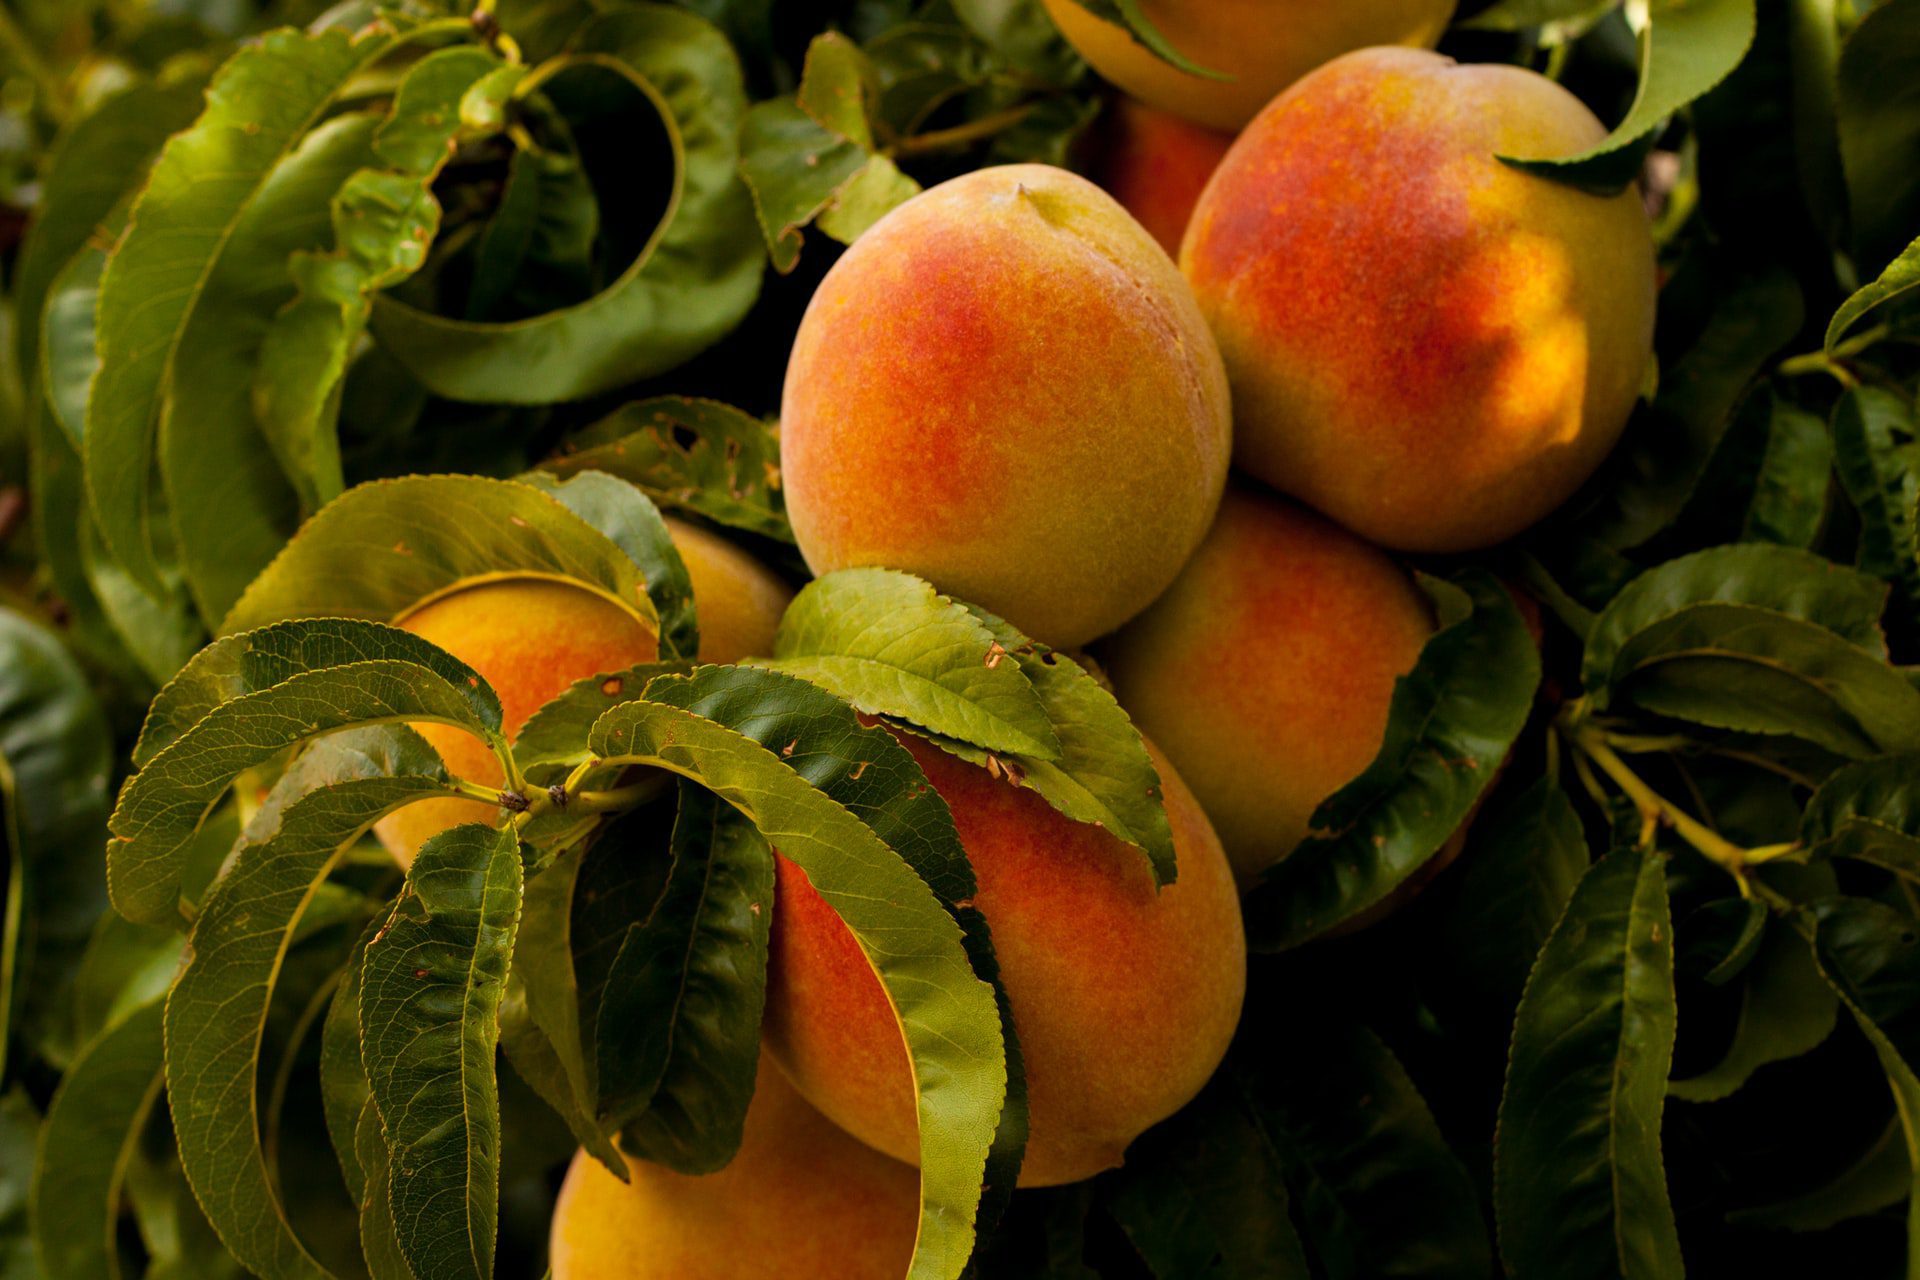 kelowna peaches at a u-pick orchard